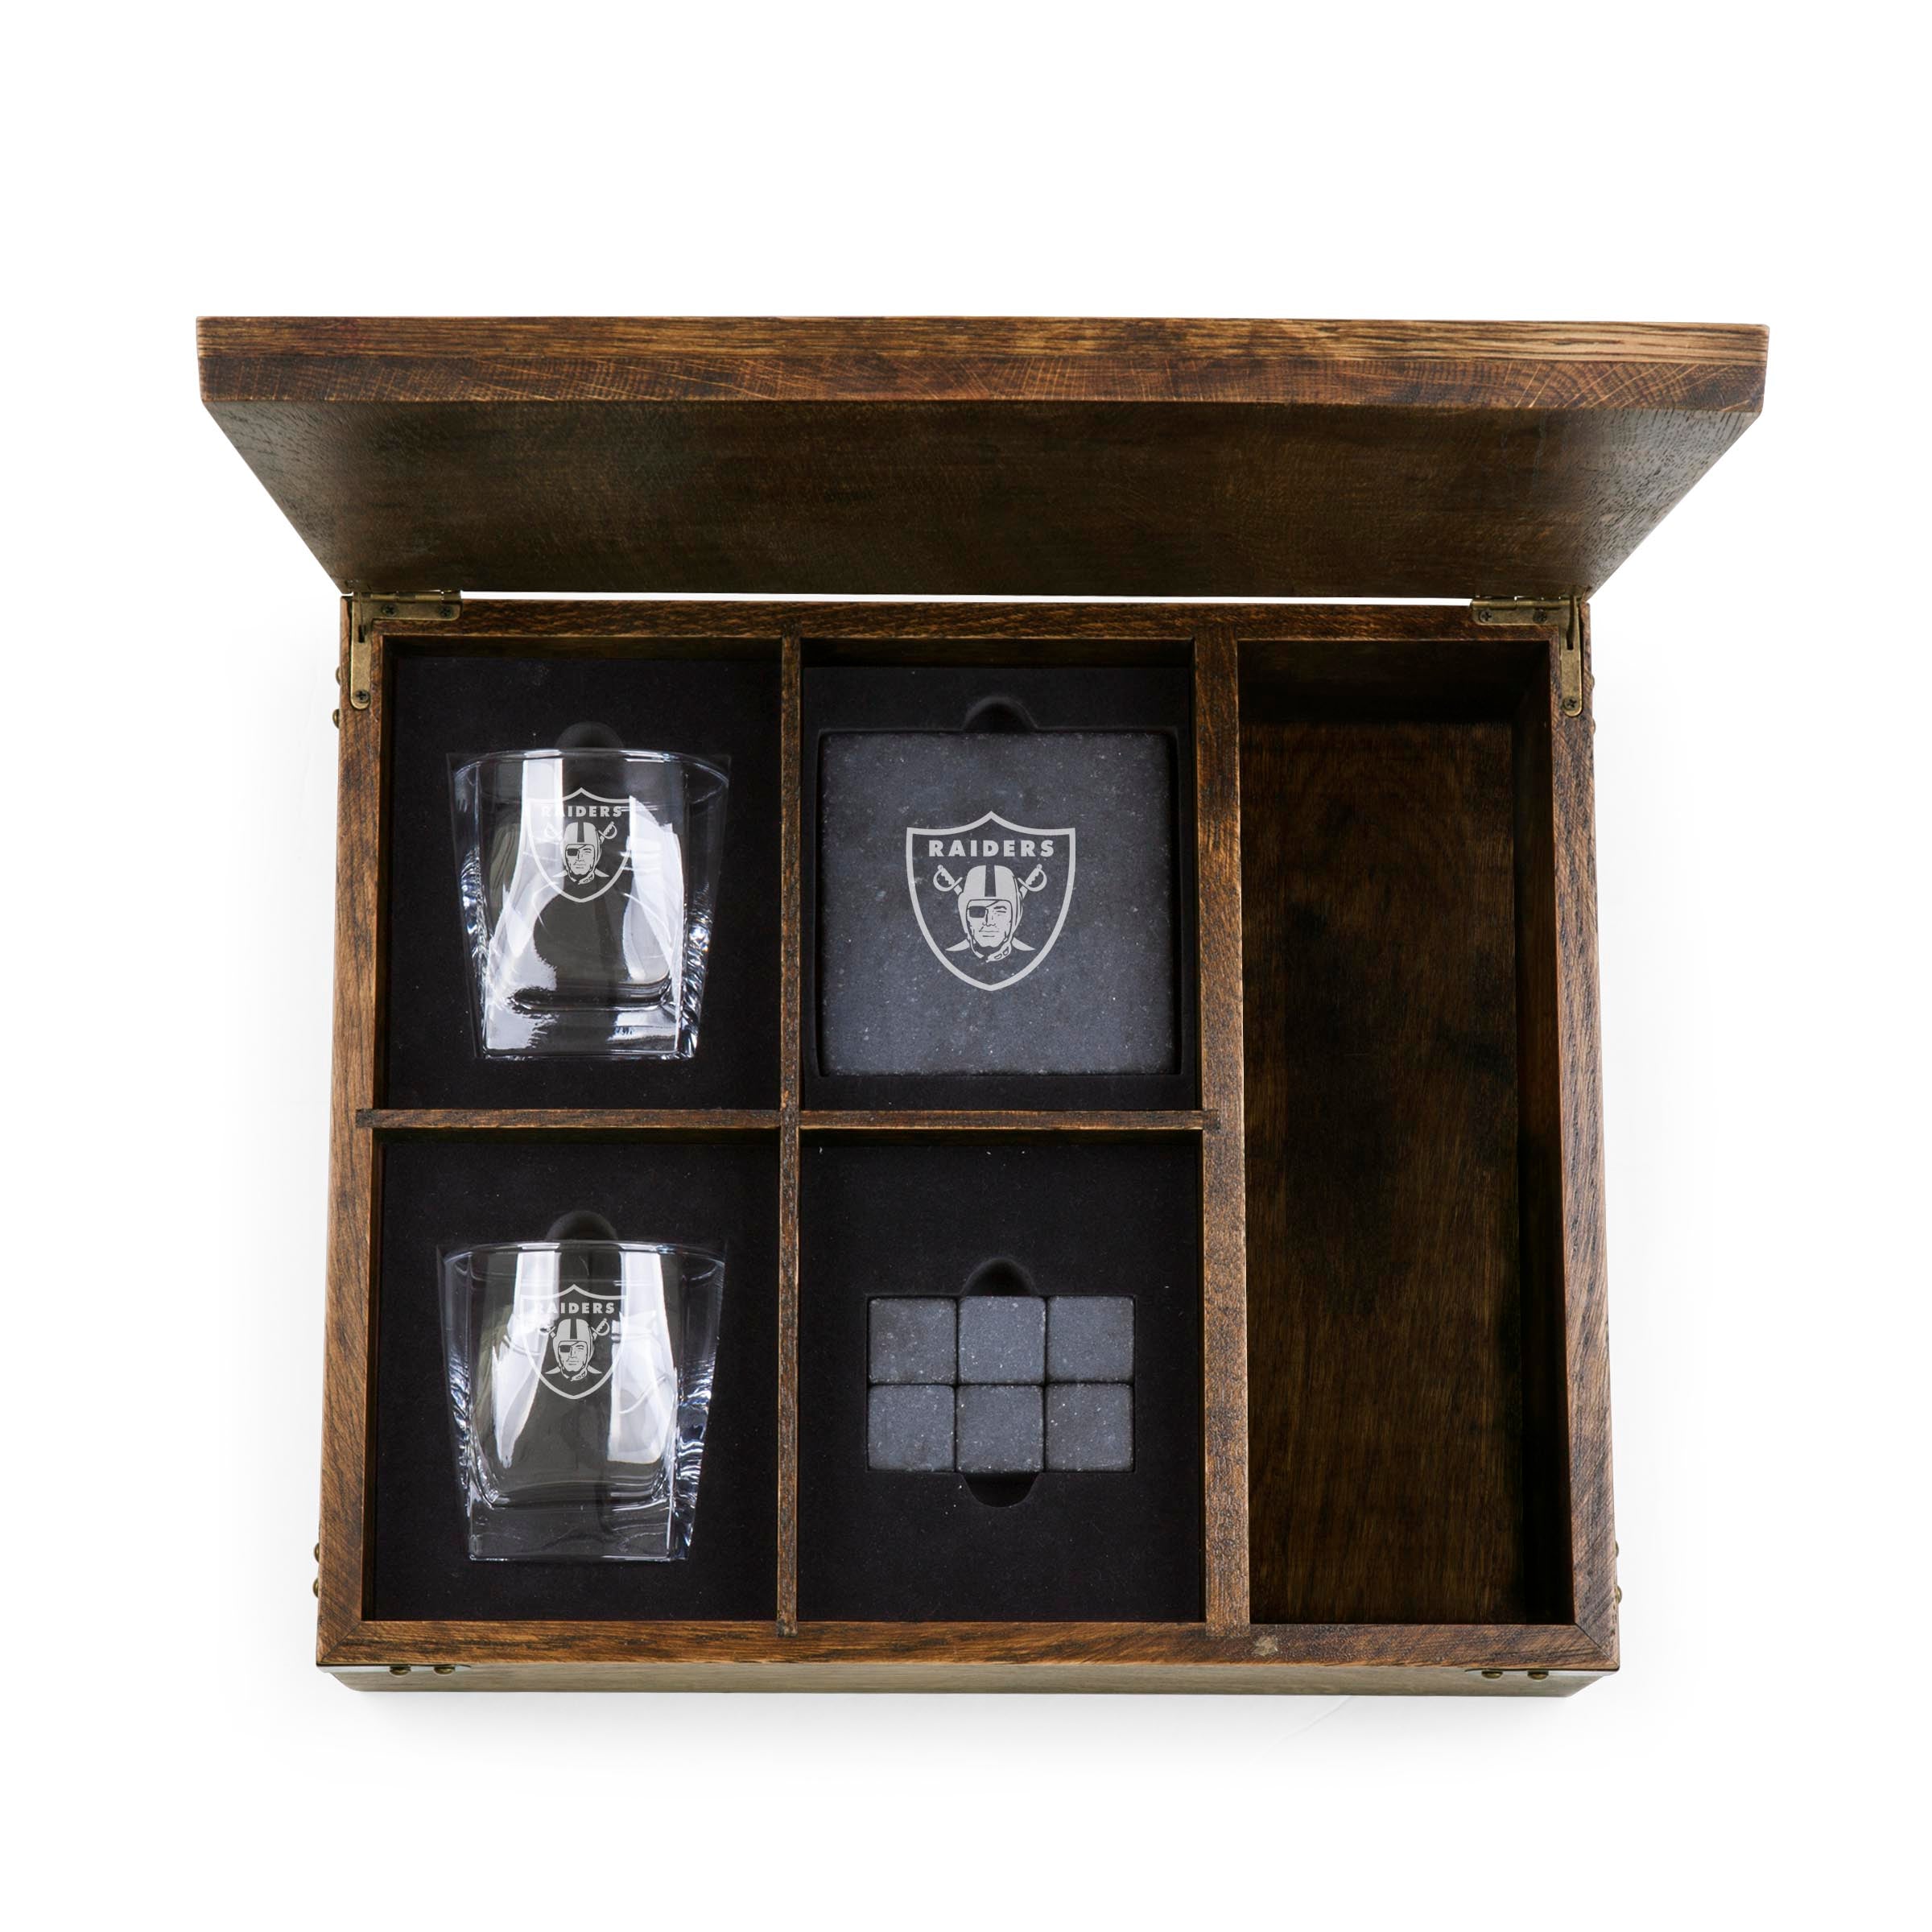 Oakland Raiders Whiskey Box Gift Set